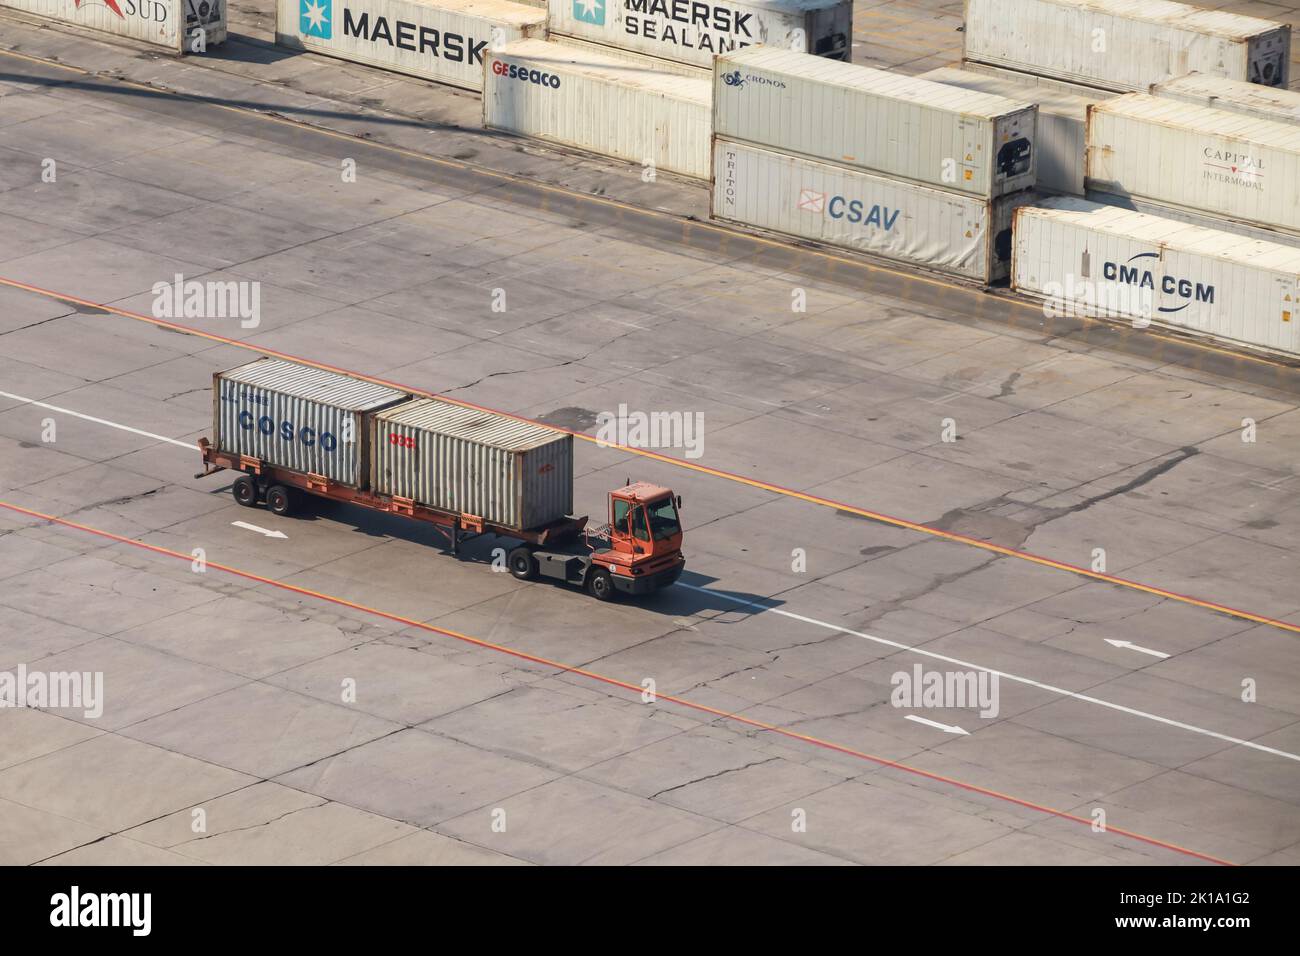 Dammam, Saudi Arabia - December 26, 2019: Container truck is in port of Dammam Stock Photo